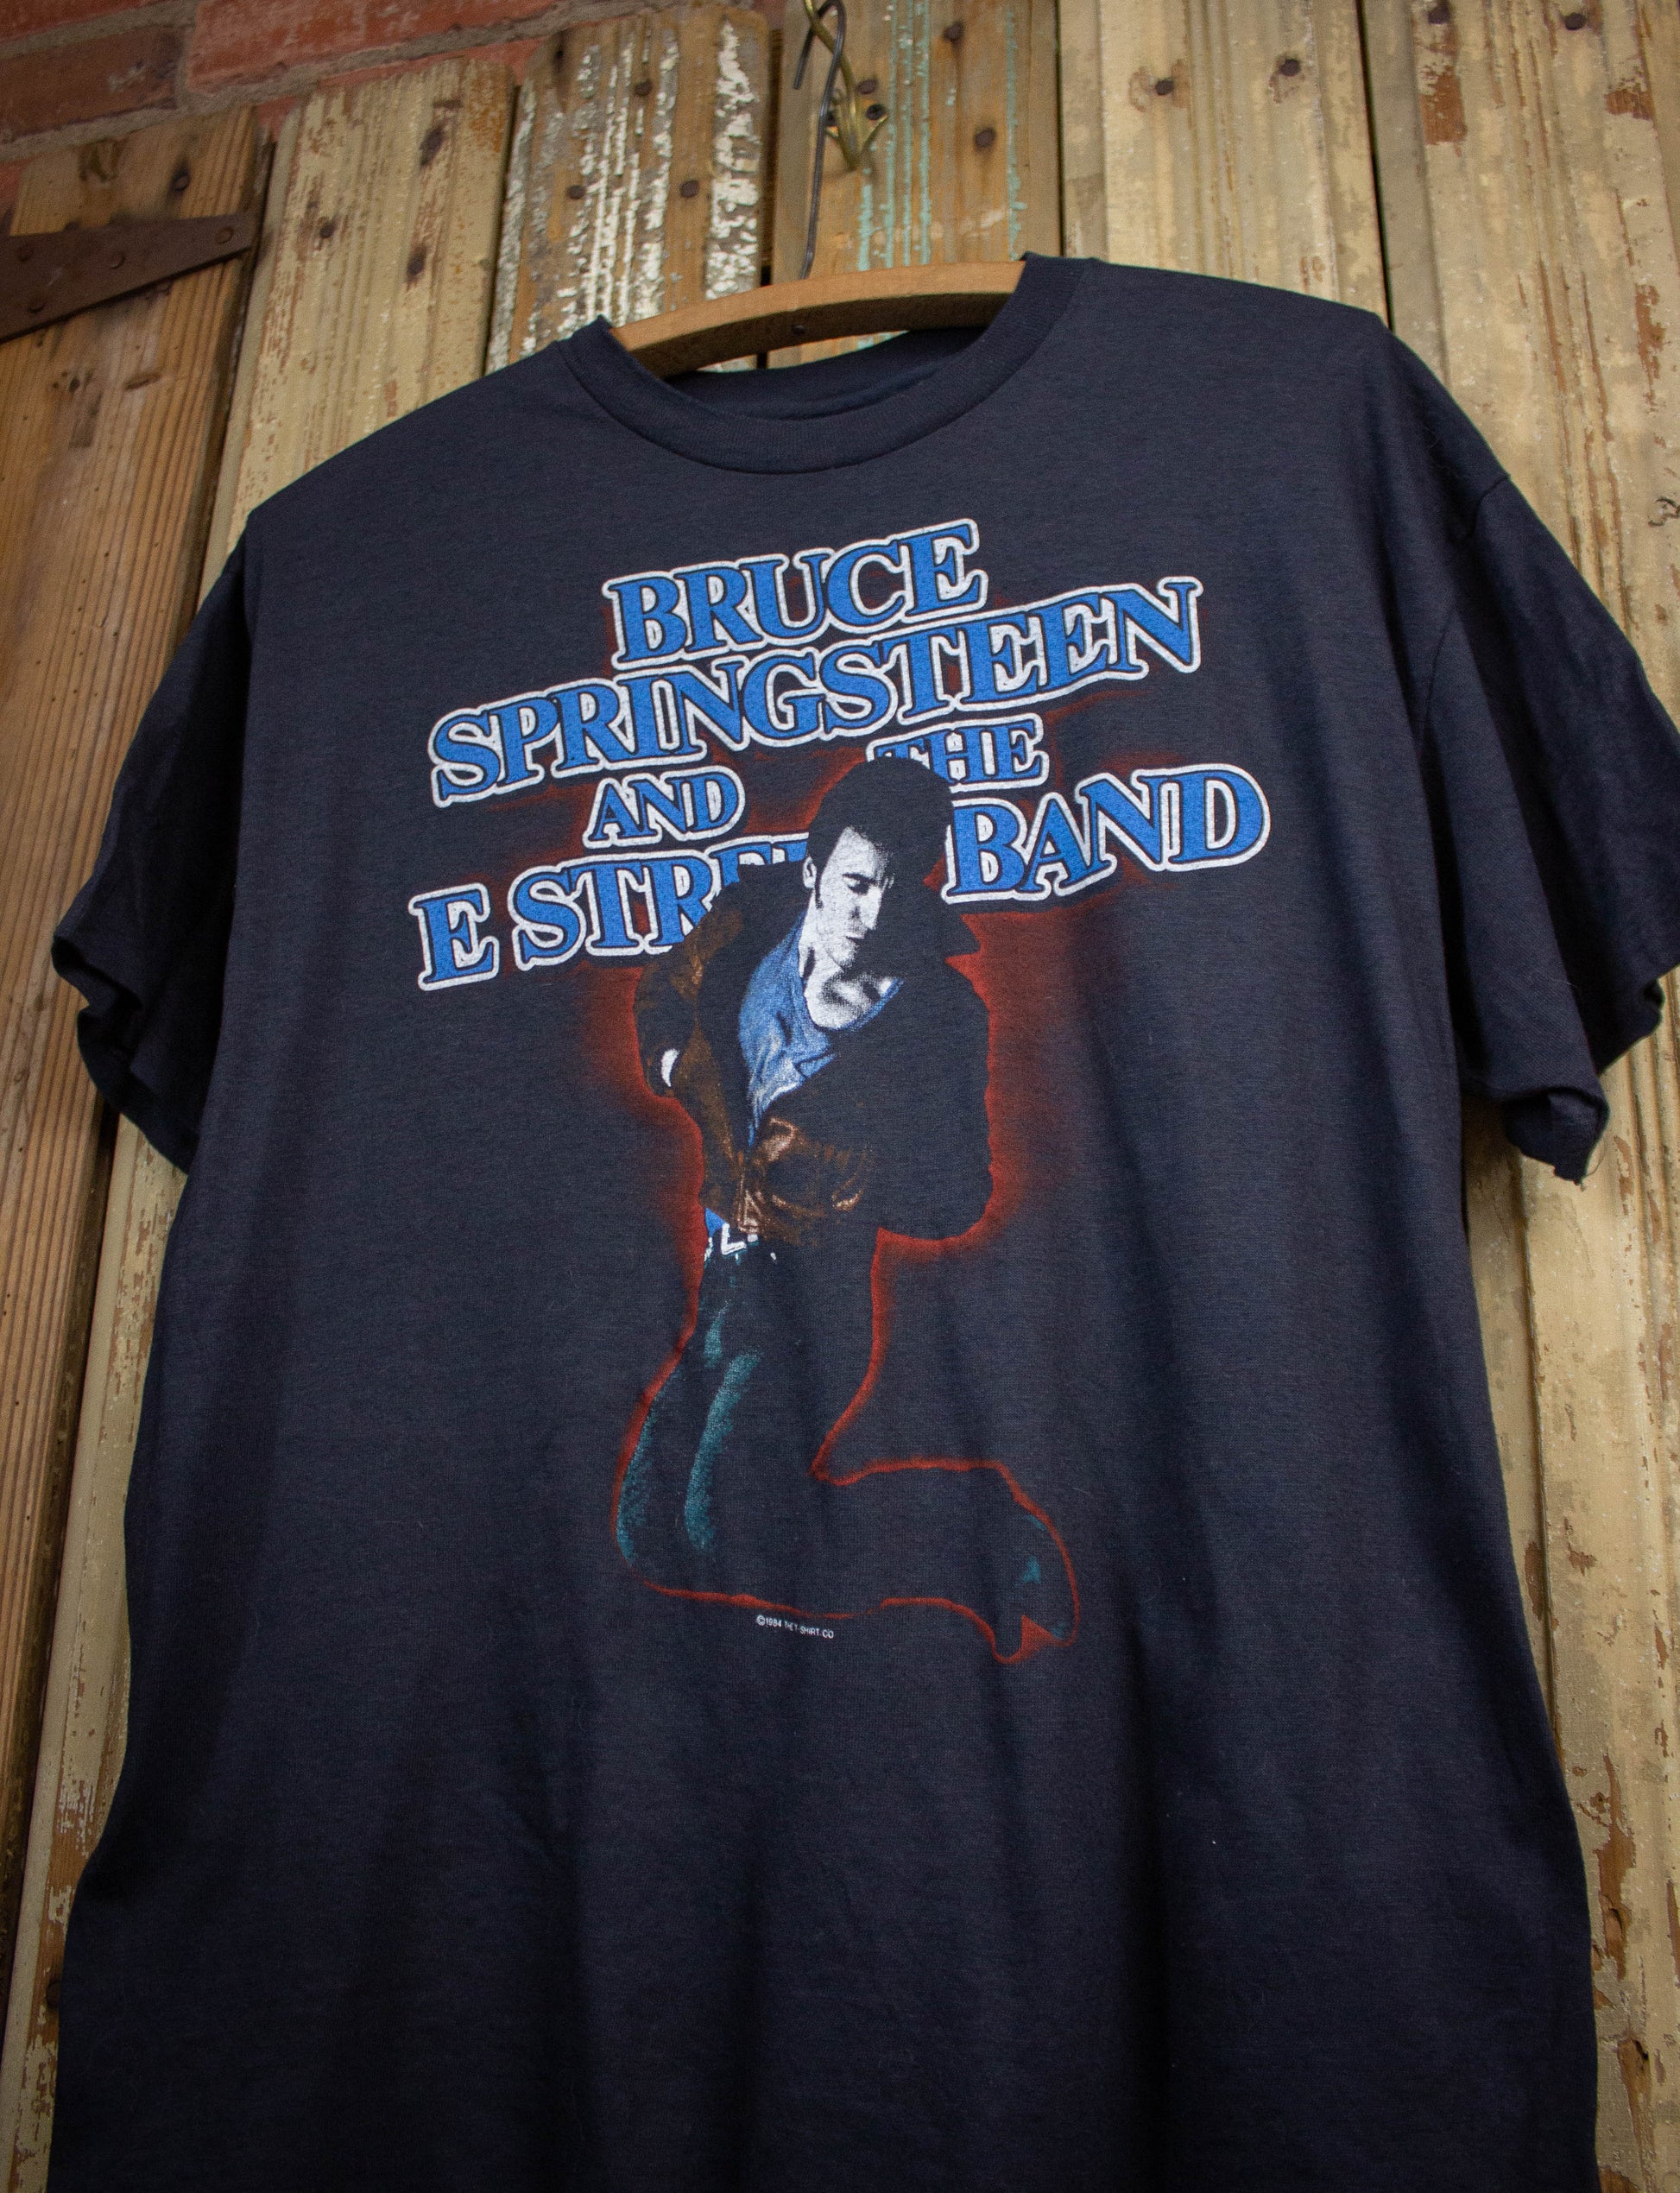 Vintage Bruce Springsteen Born In the USA Concert T Shirt 1984-85 Black Large